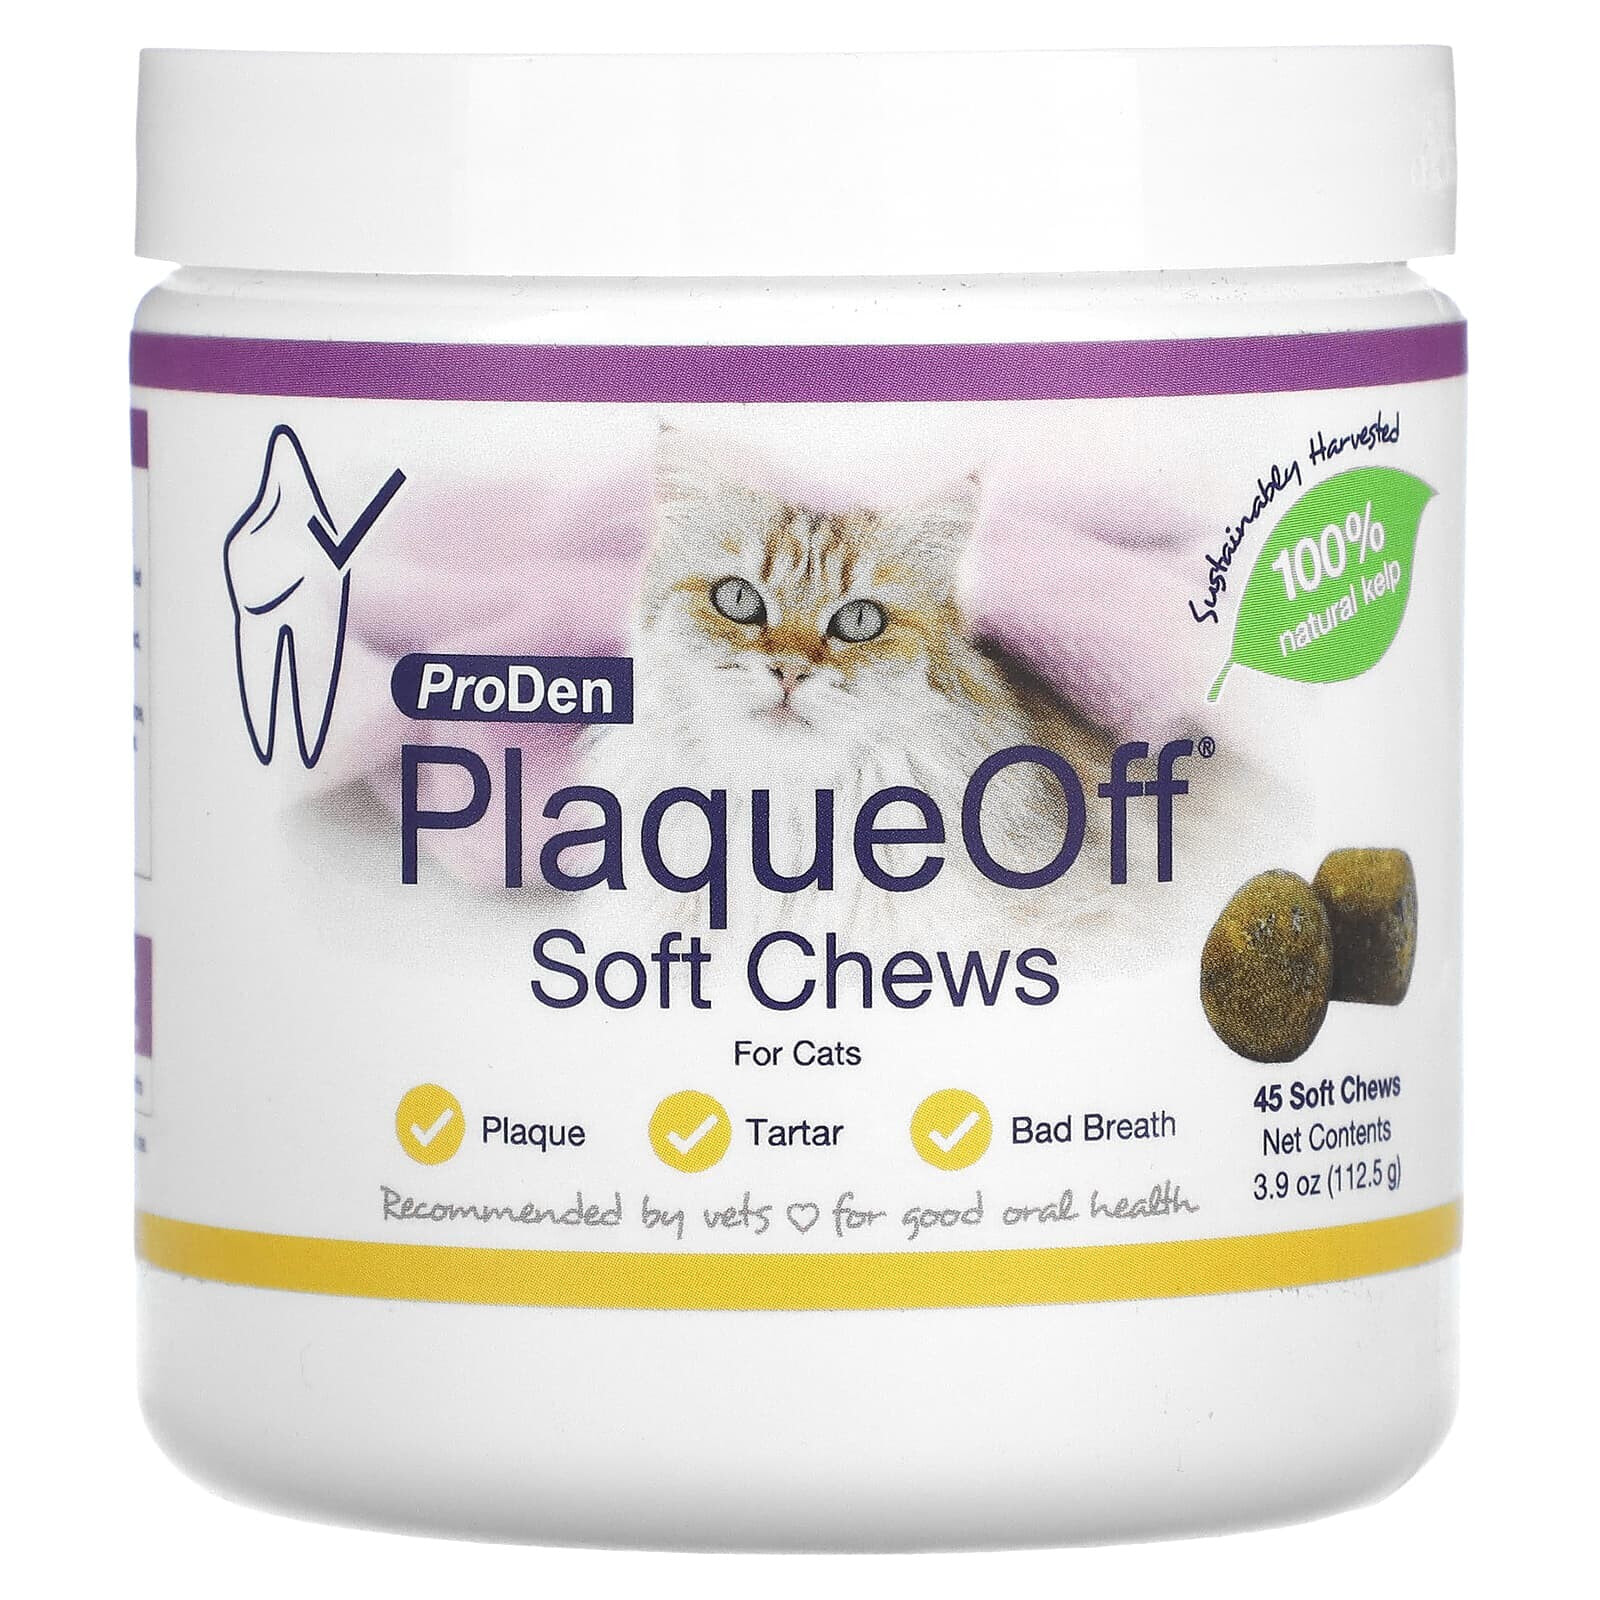 ProDen, PlaqueOff Soft Chews, For Cats, 45 Soft Chews, 3.9 oz (112.5 g)